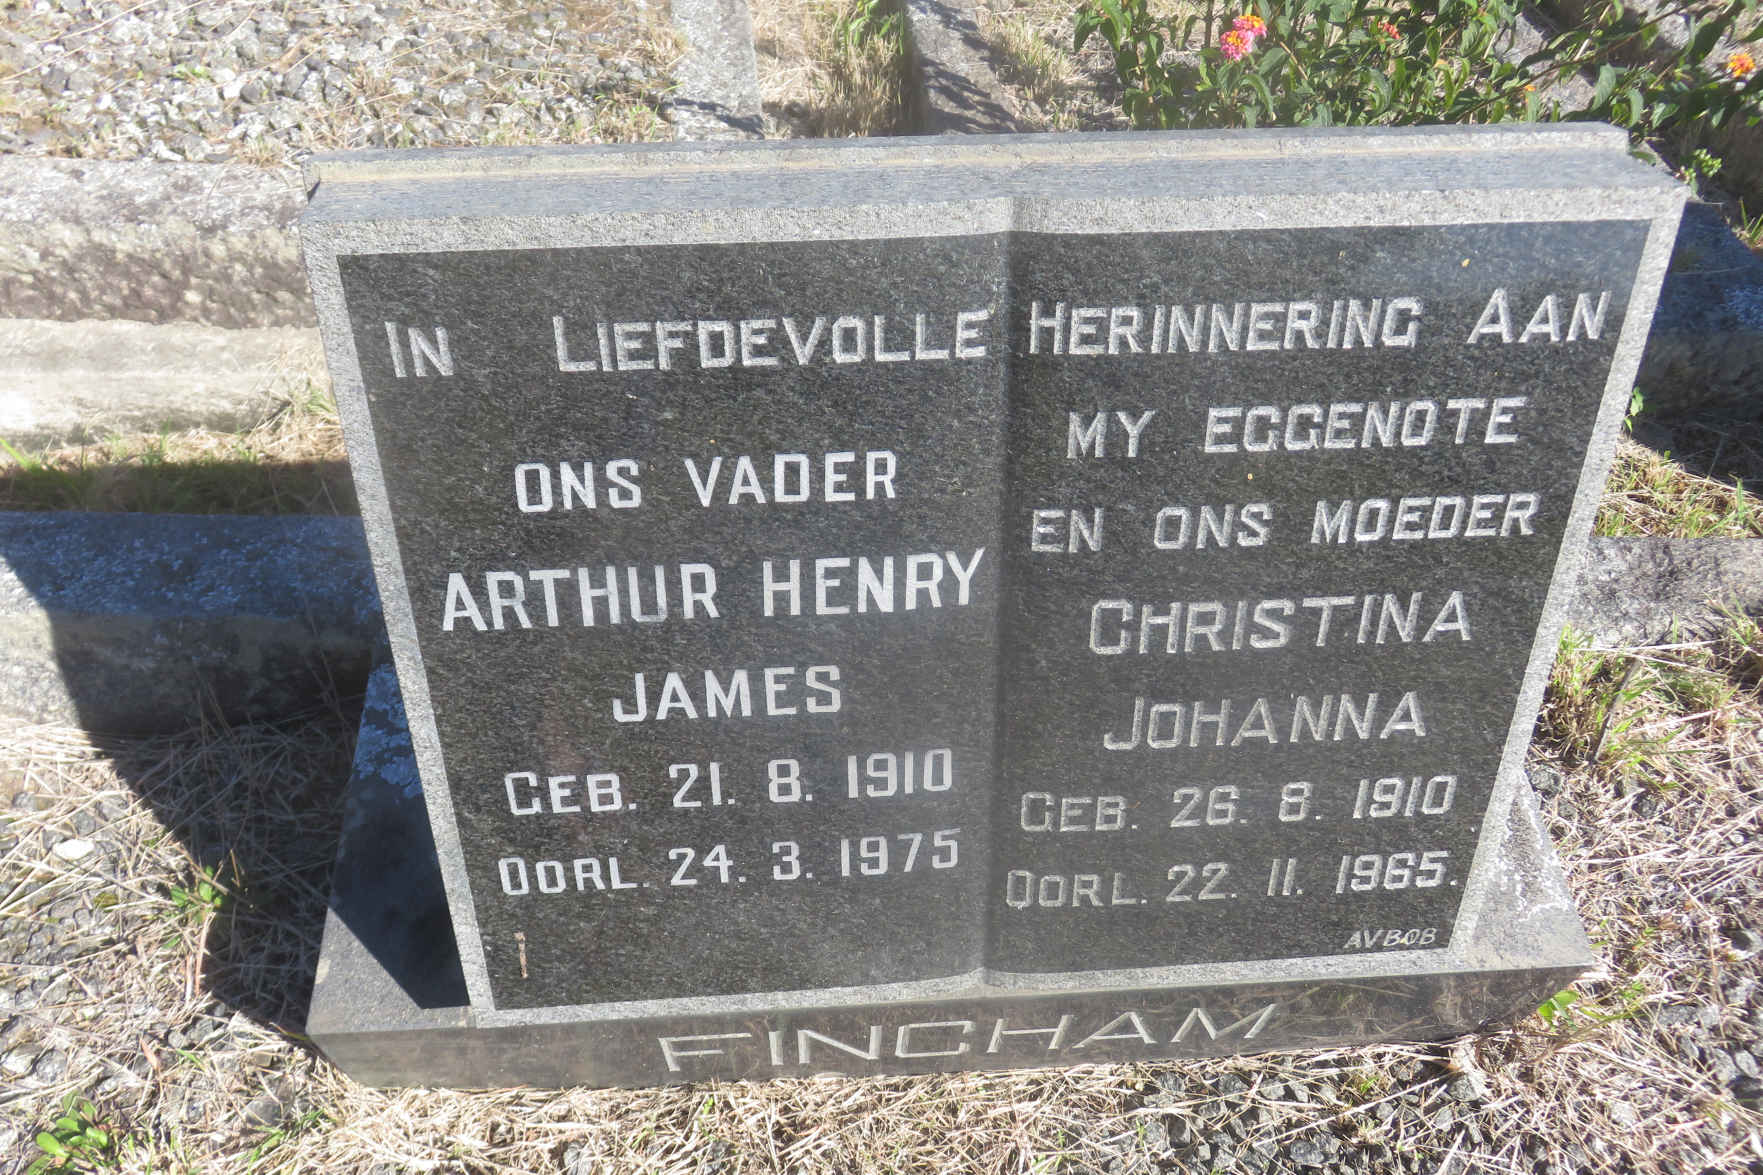 FINCHAM Arthur Henry James 1910-1975 & Christina Johanna 1910-1965